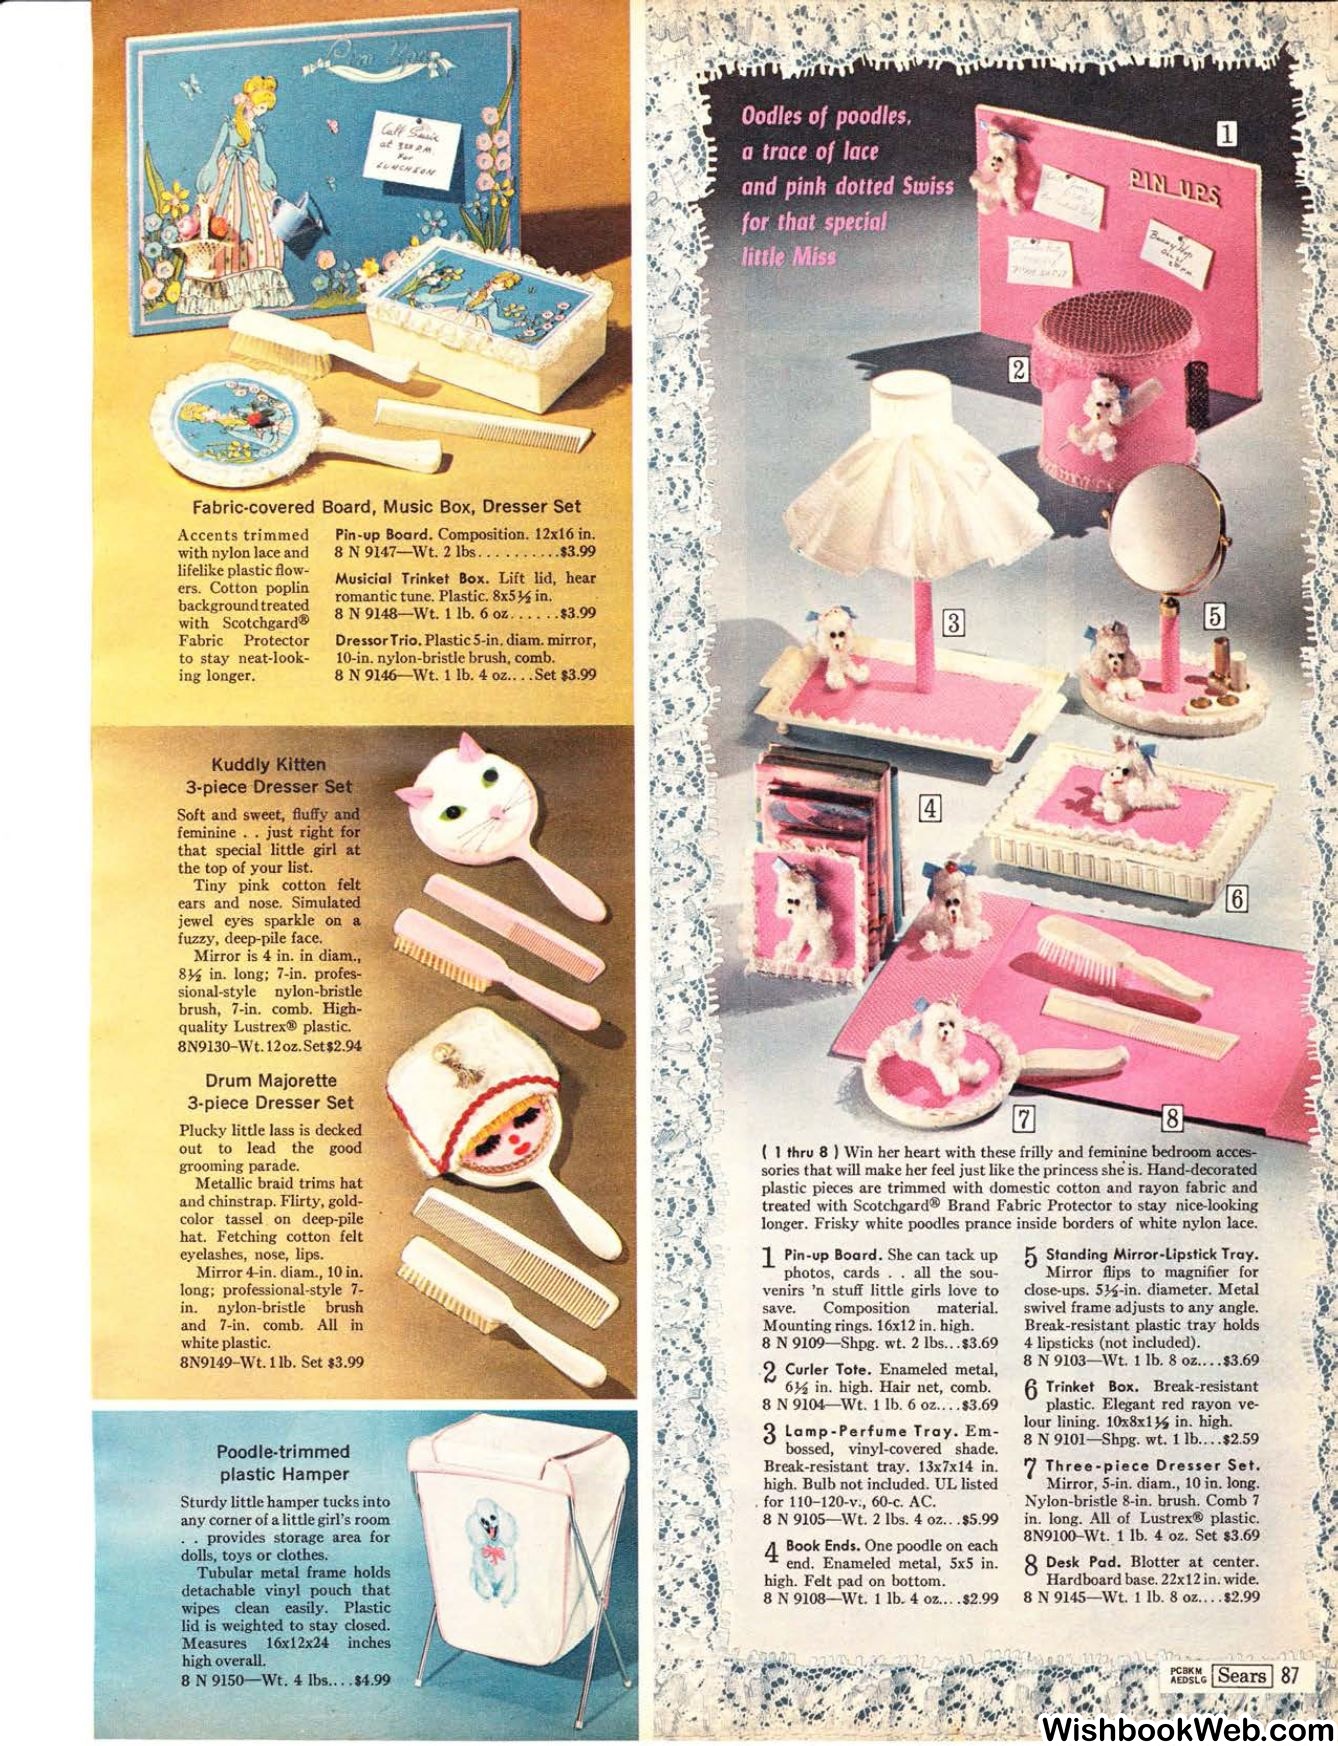 1968 Sears Wishbook